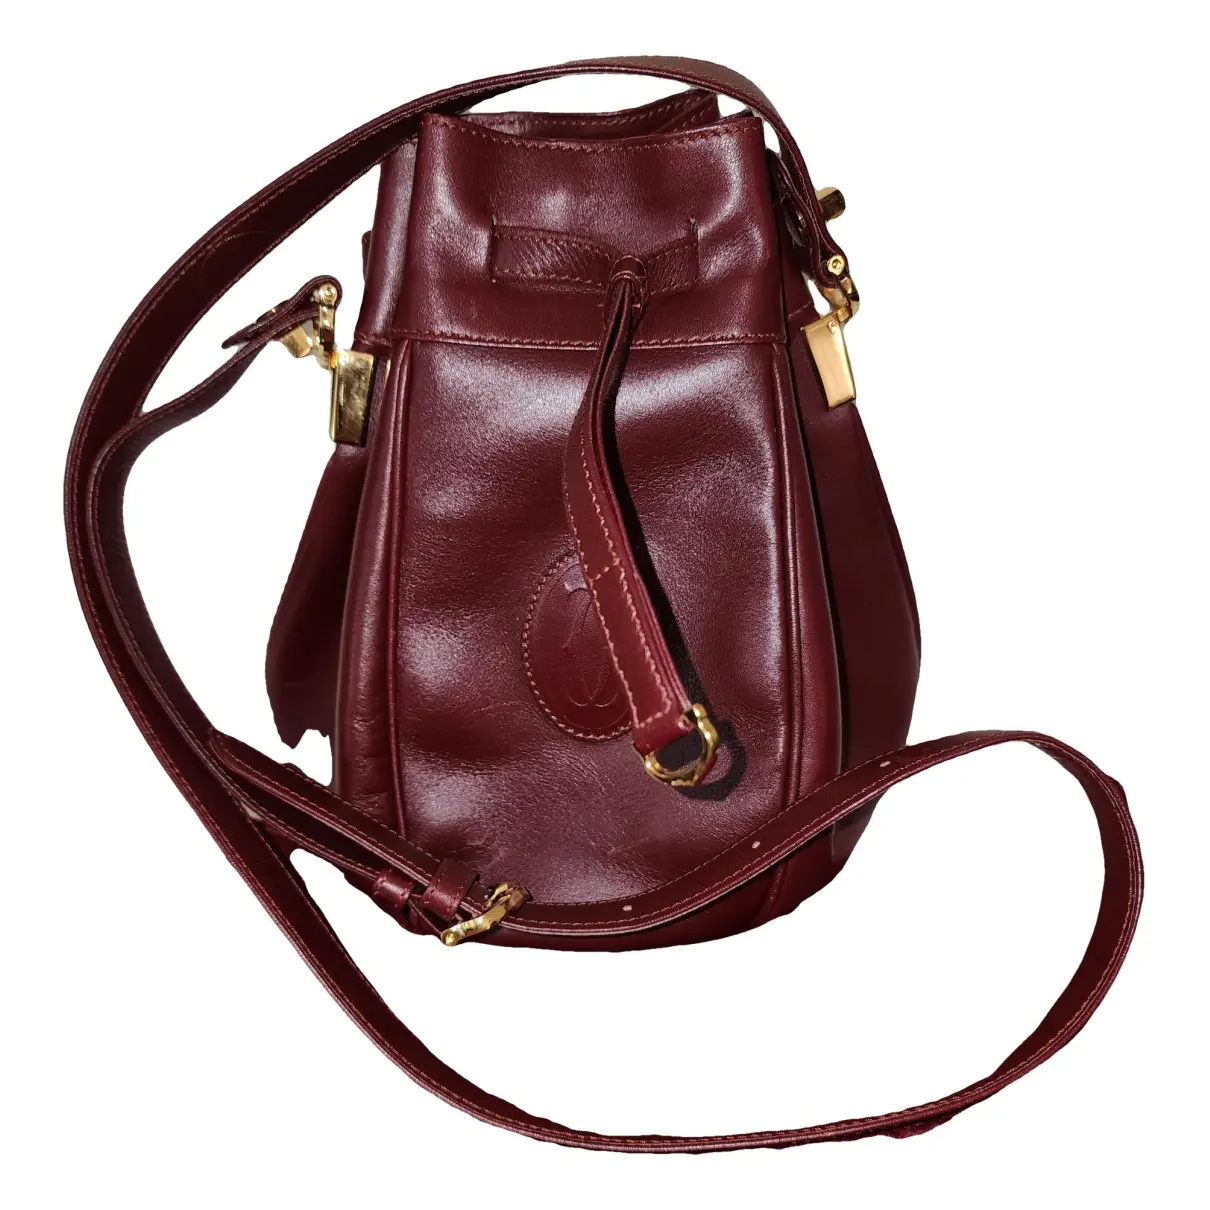 Seau leather handbag